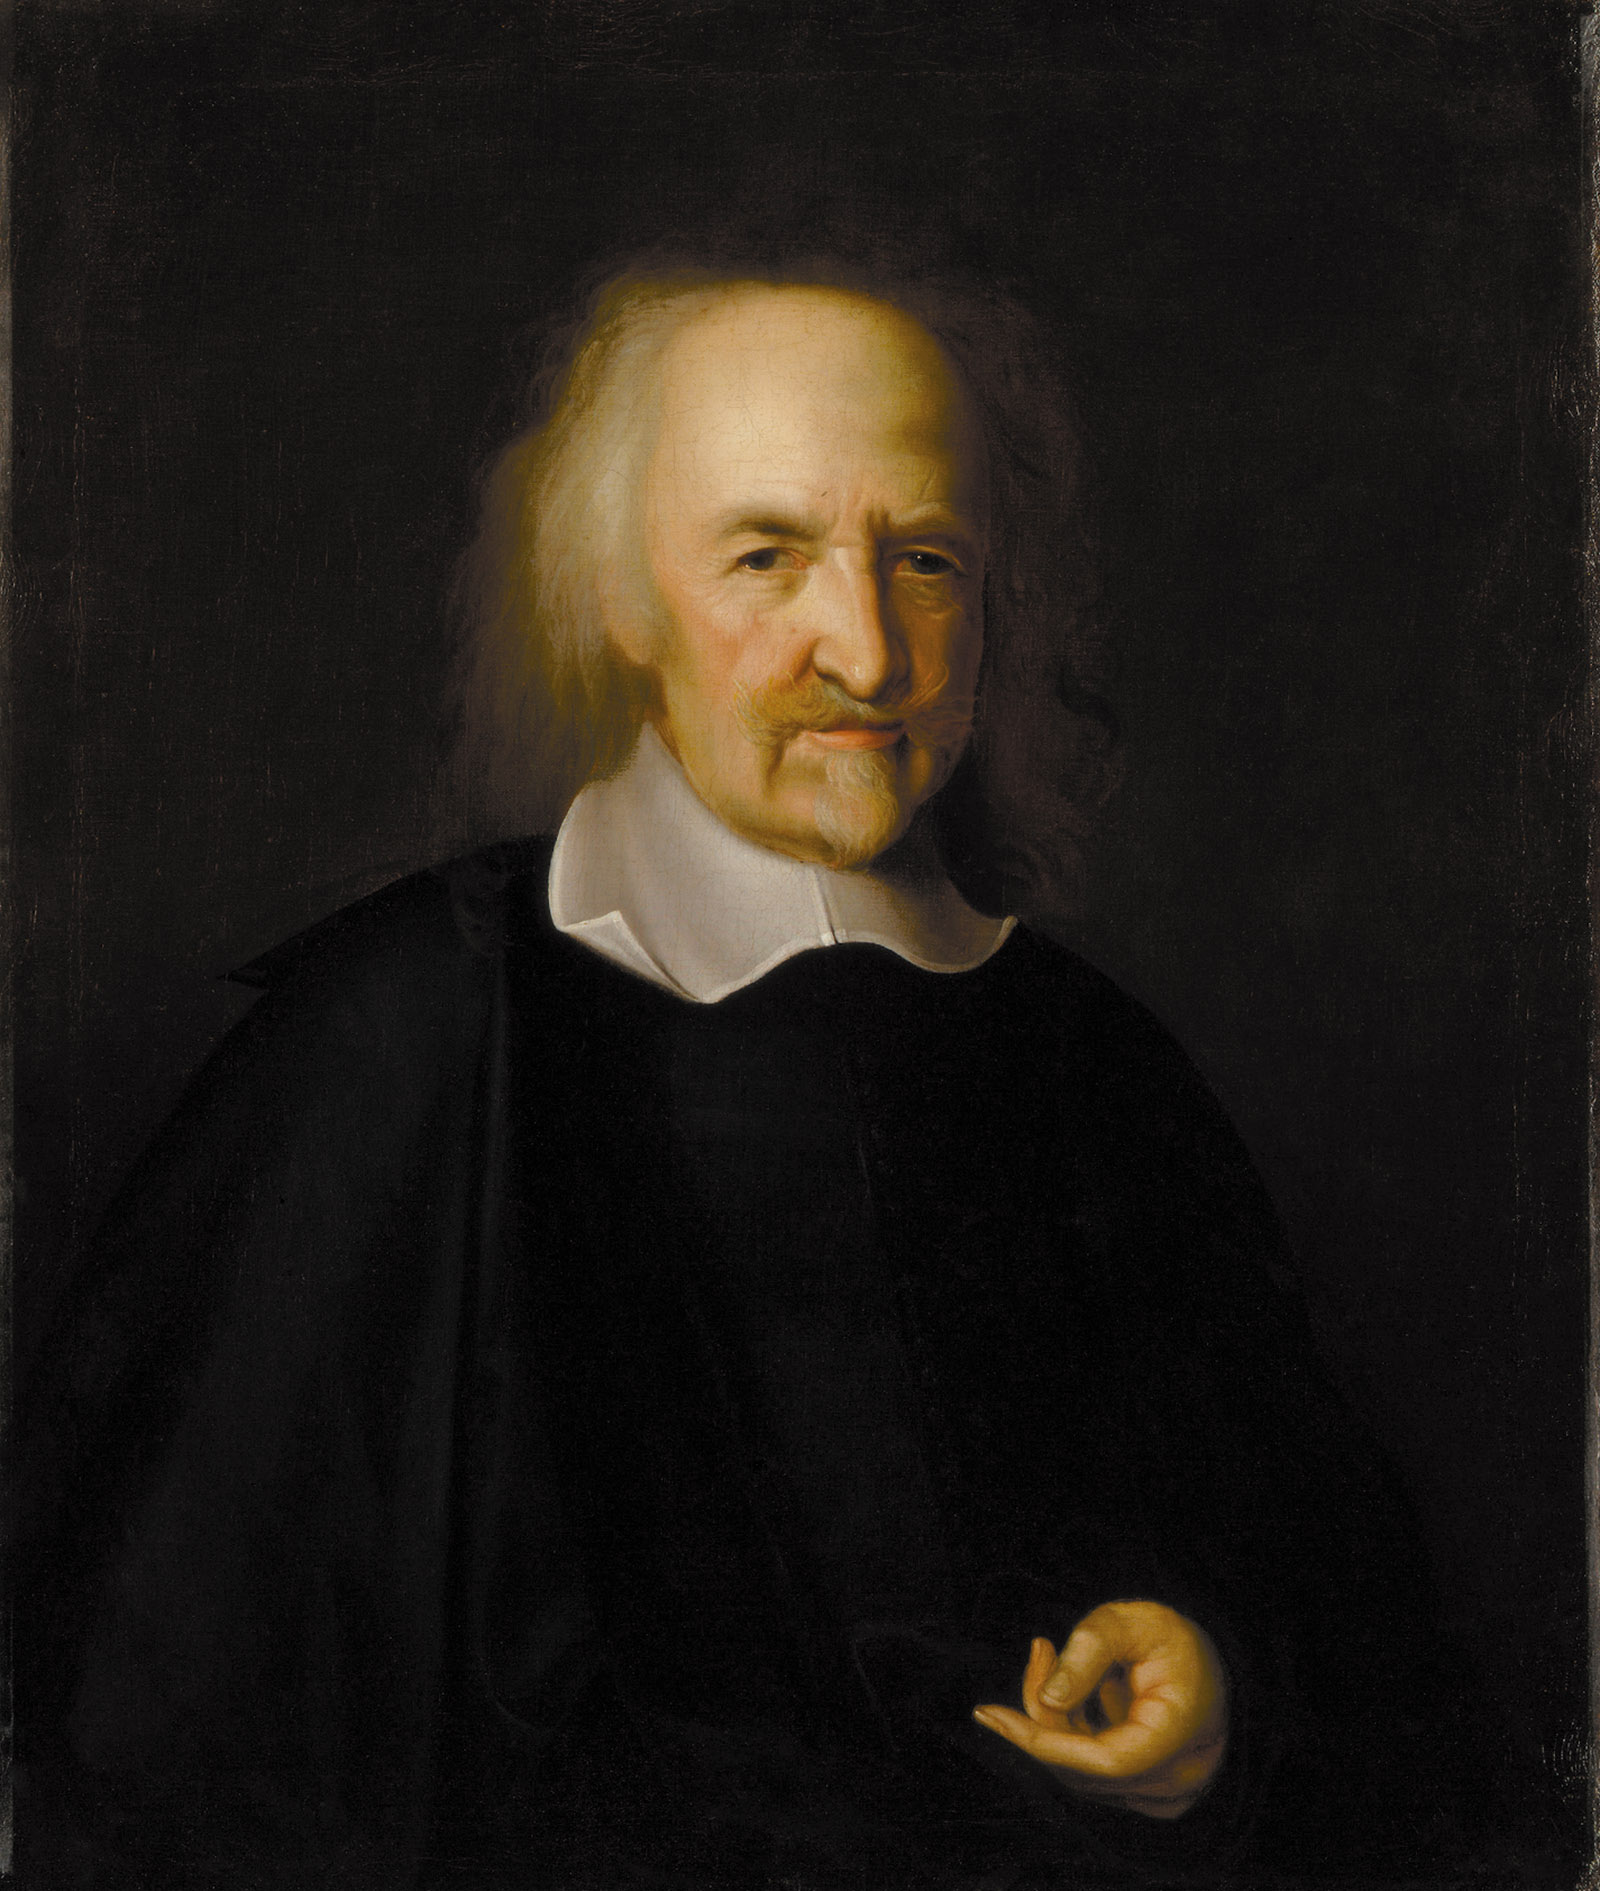 Thomas Hobbes; portrait by John Michael Wright, circa 1669–1670